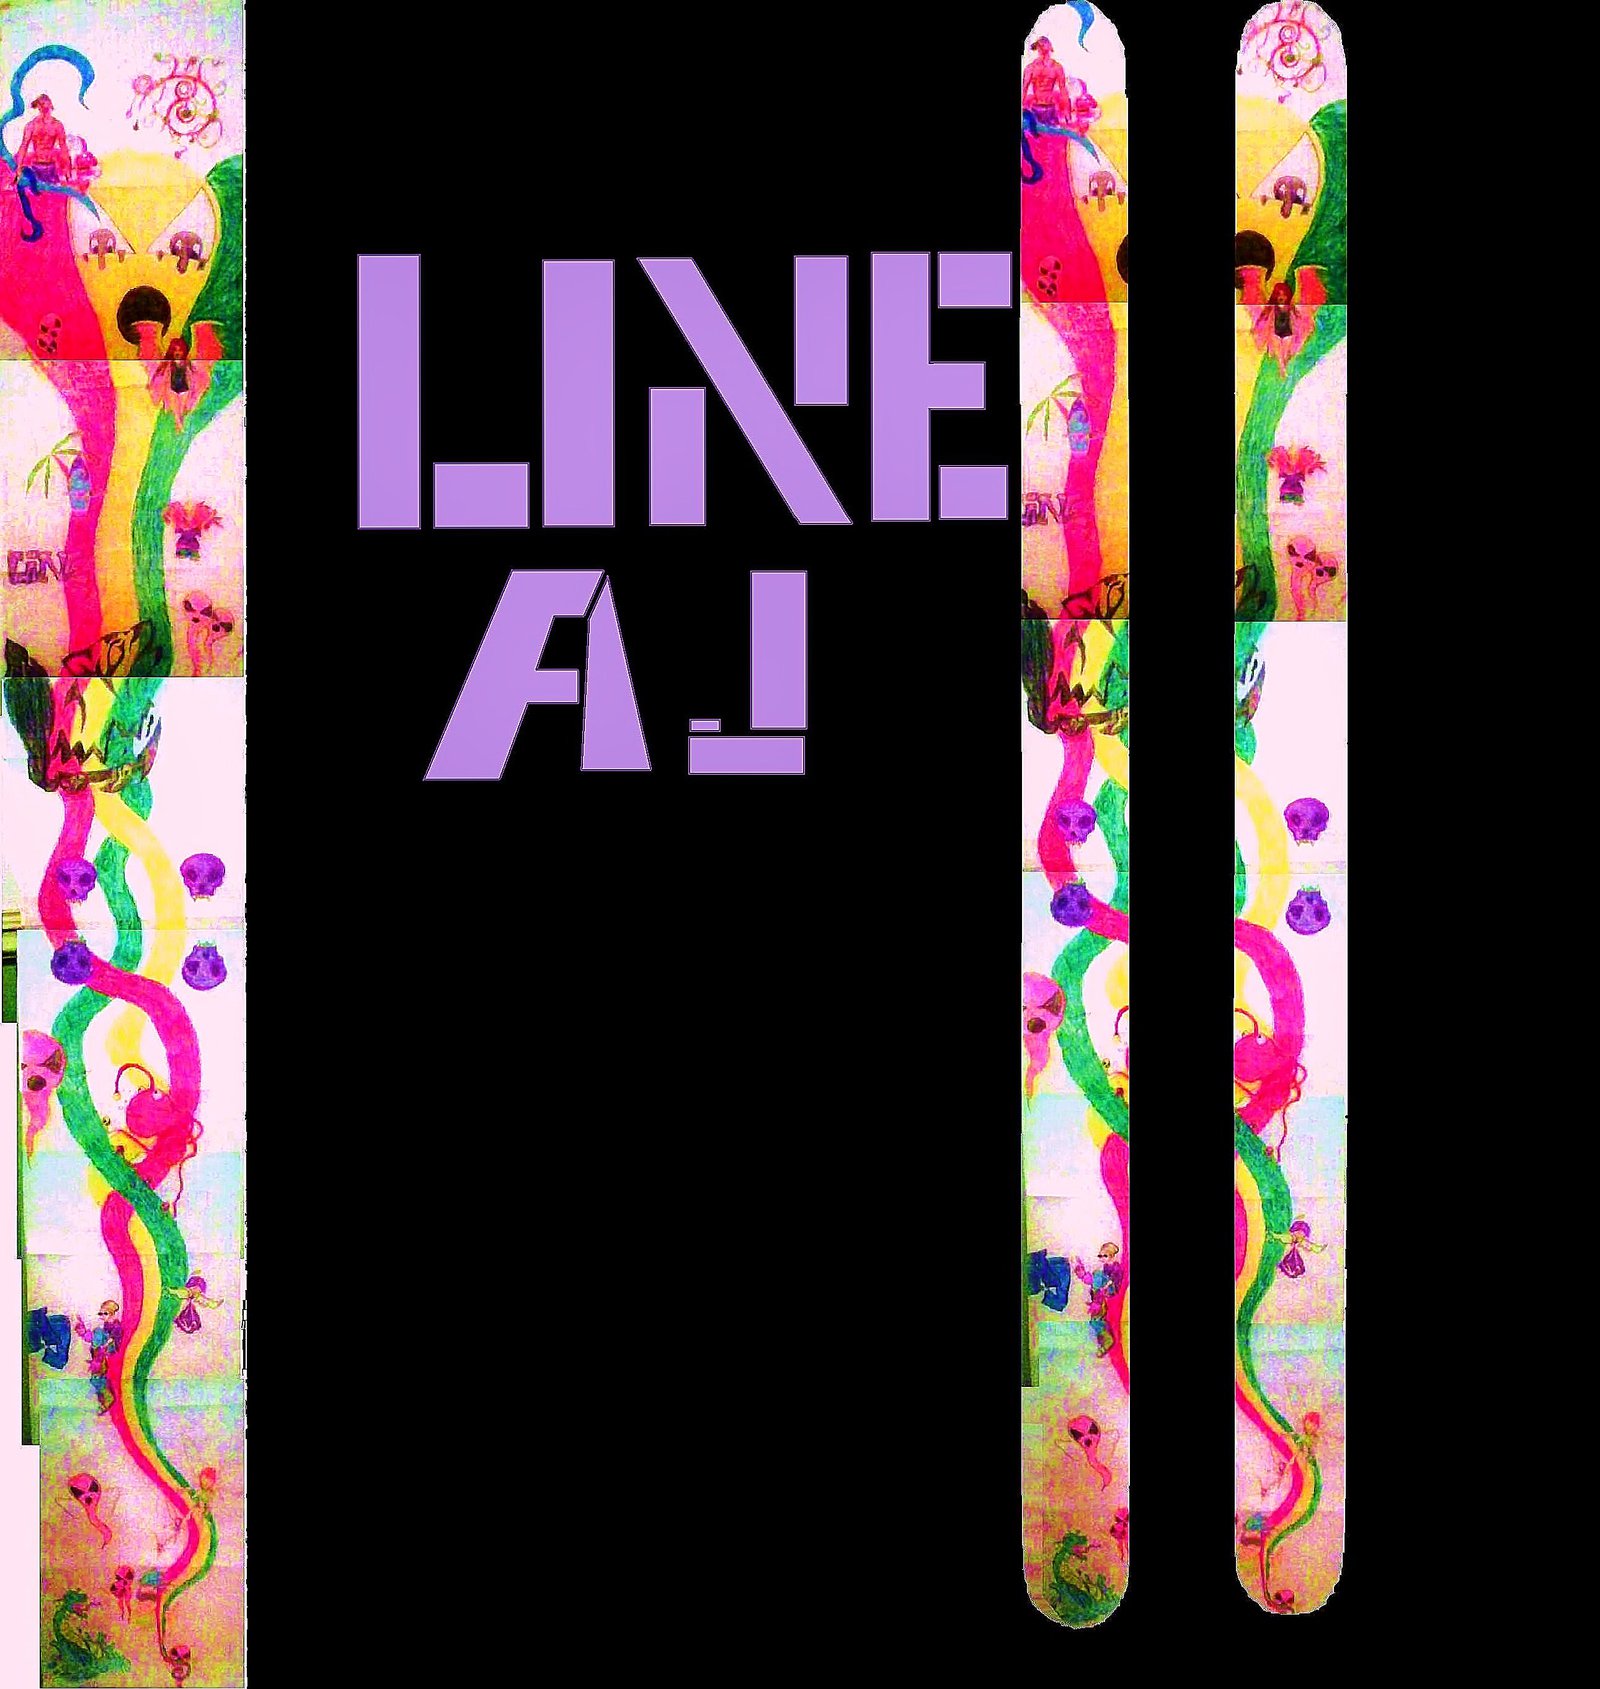 Line aj